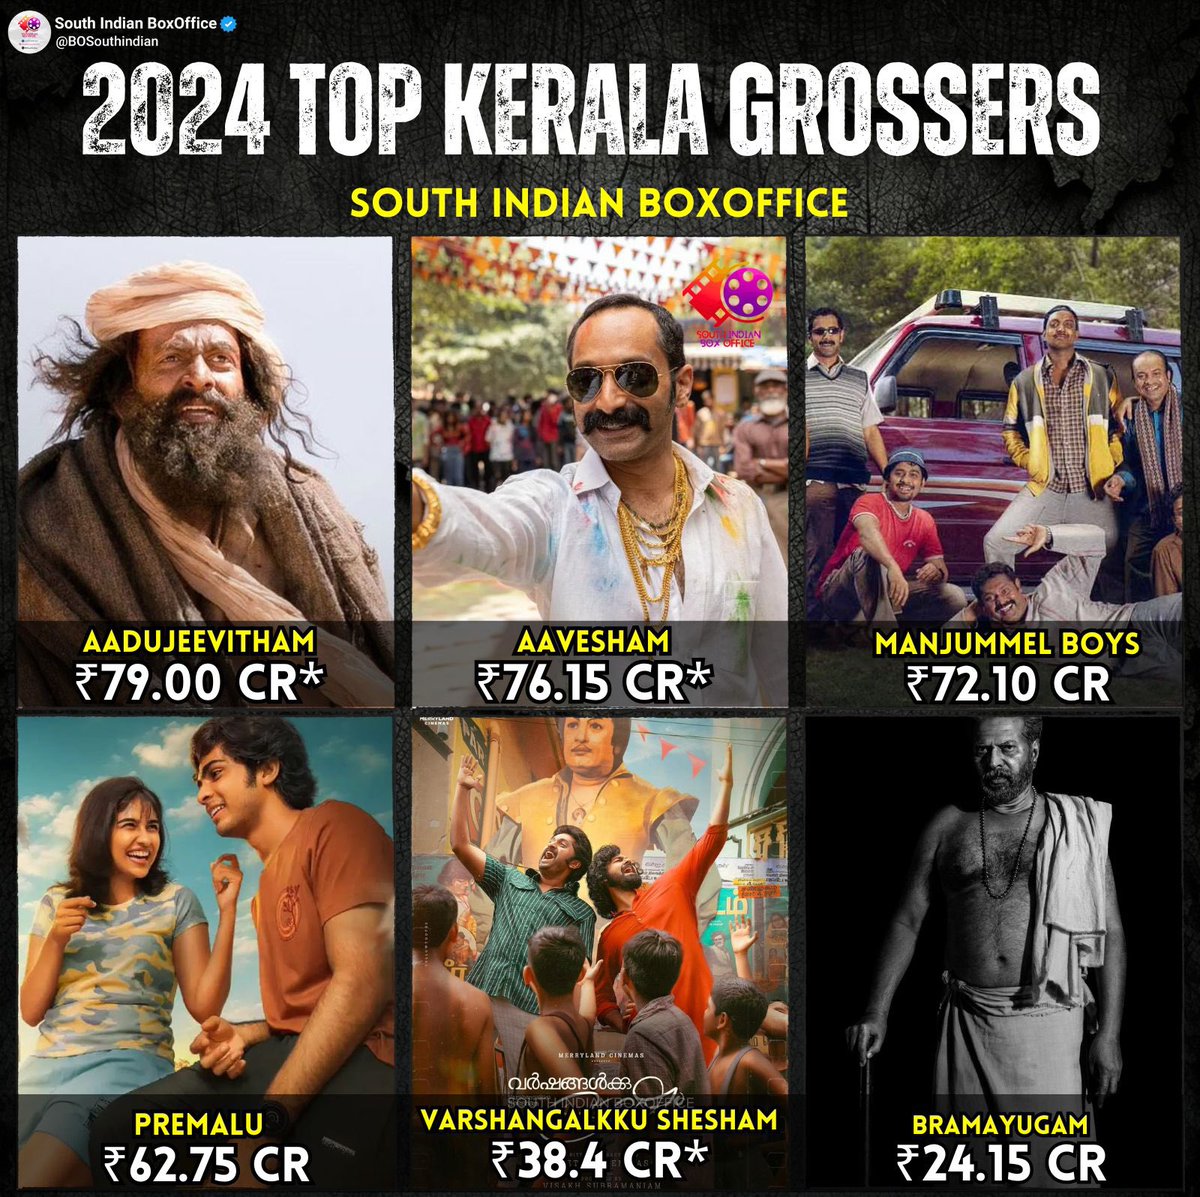 2024 Top 10 Kerala Grossers 

1 #Aadujeevitham : ₹79 CR*
2 #Aavesham : ₹76.15 CR*
3 #Manjummelboys : ₹72.10 CR
4 #Premalu  : ₹62.75 CR
5 #VarshangalkkuShesham : 38.4 CR*
6 #Bramayugam : ₹24.15 CR
7 #AbrahamOzler : ₹23.05 CR
8 #MalaikottaiVaaliban : ₹14.5 CR
9